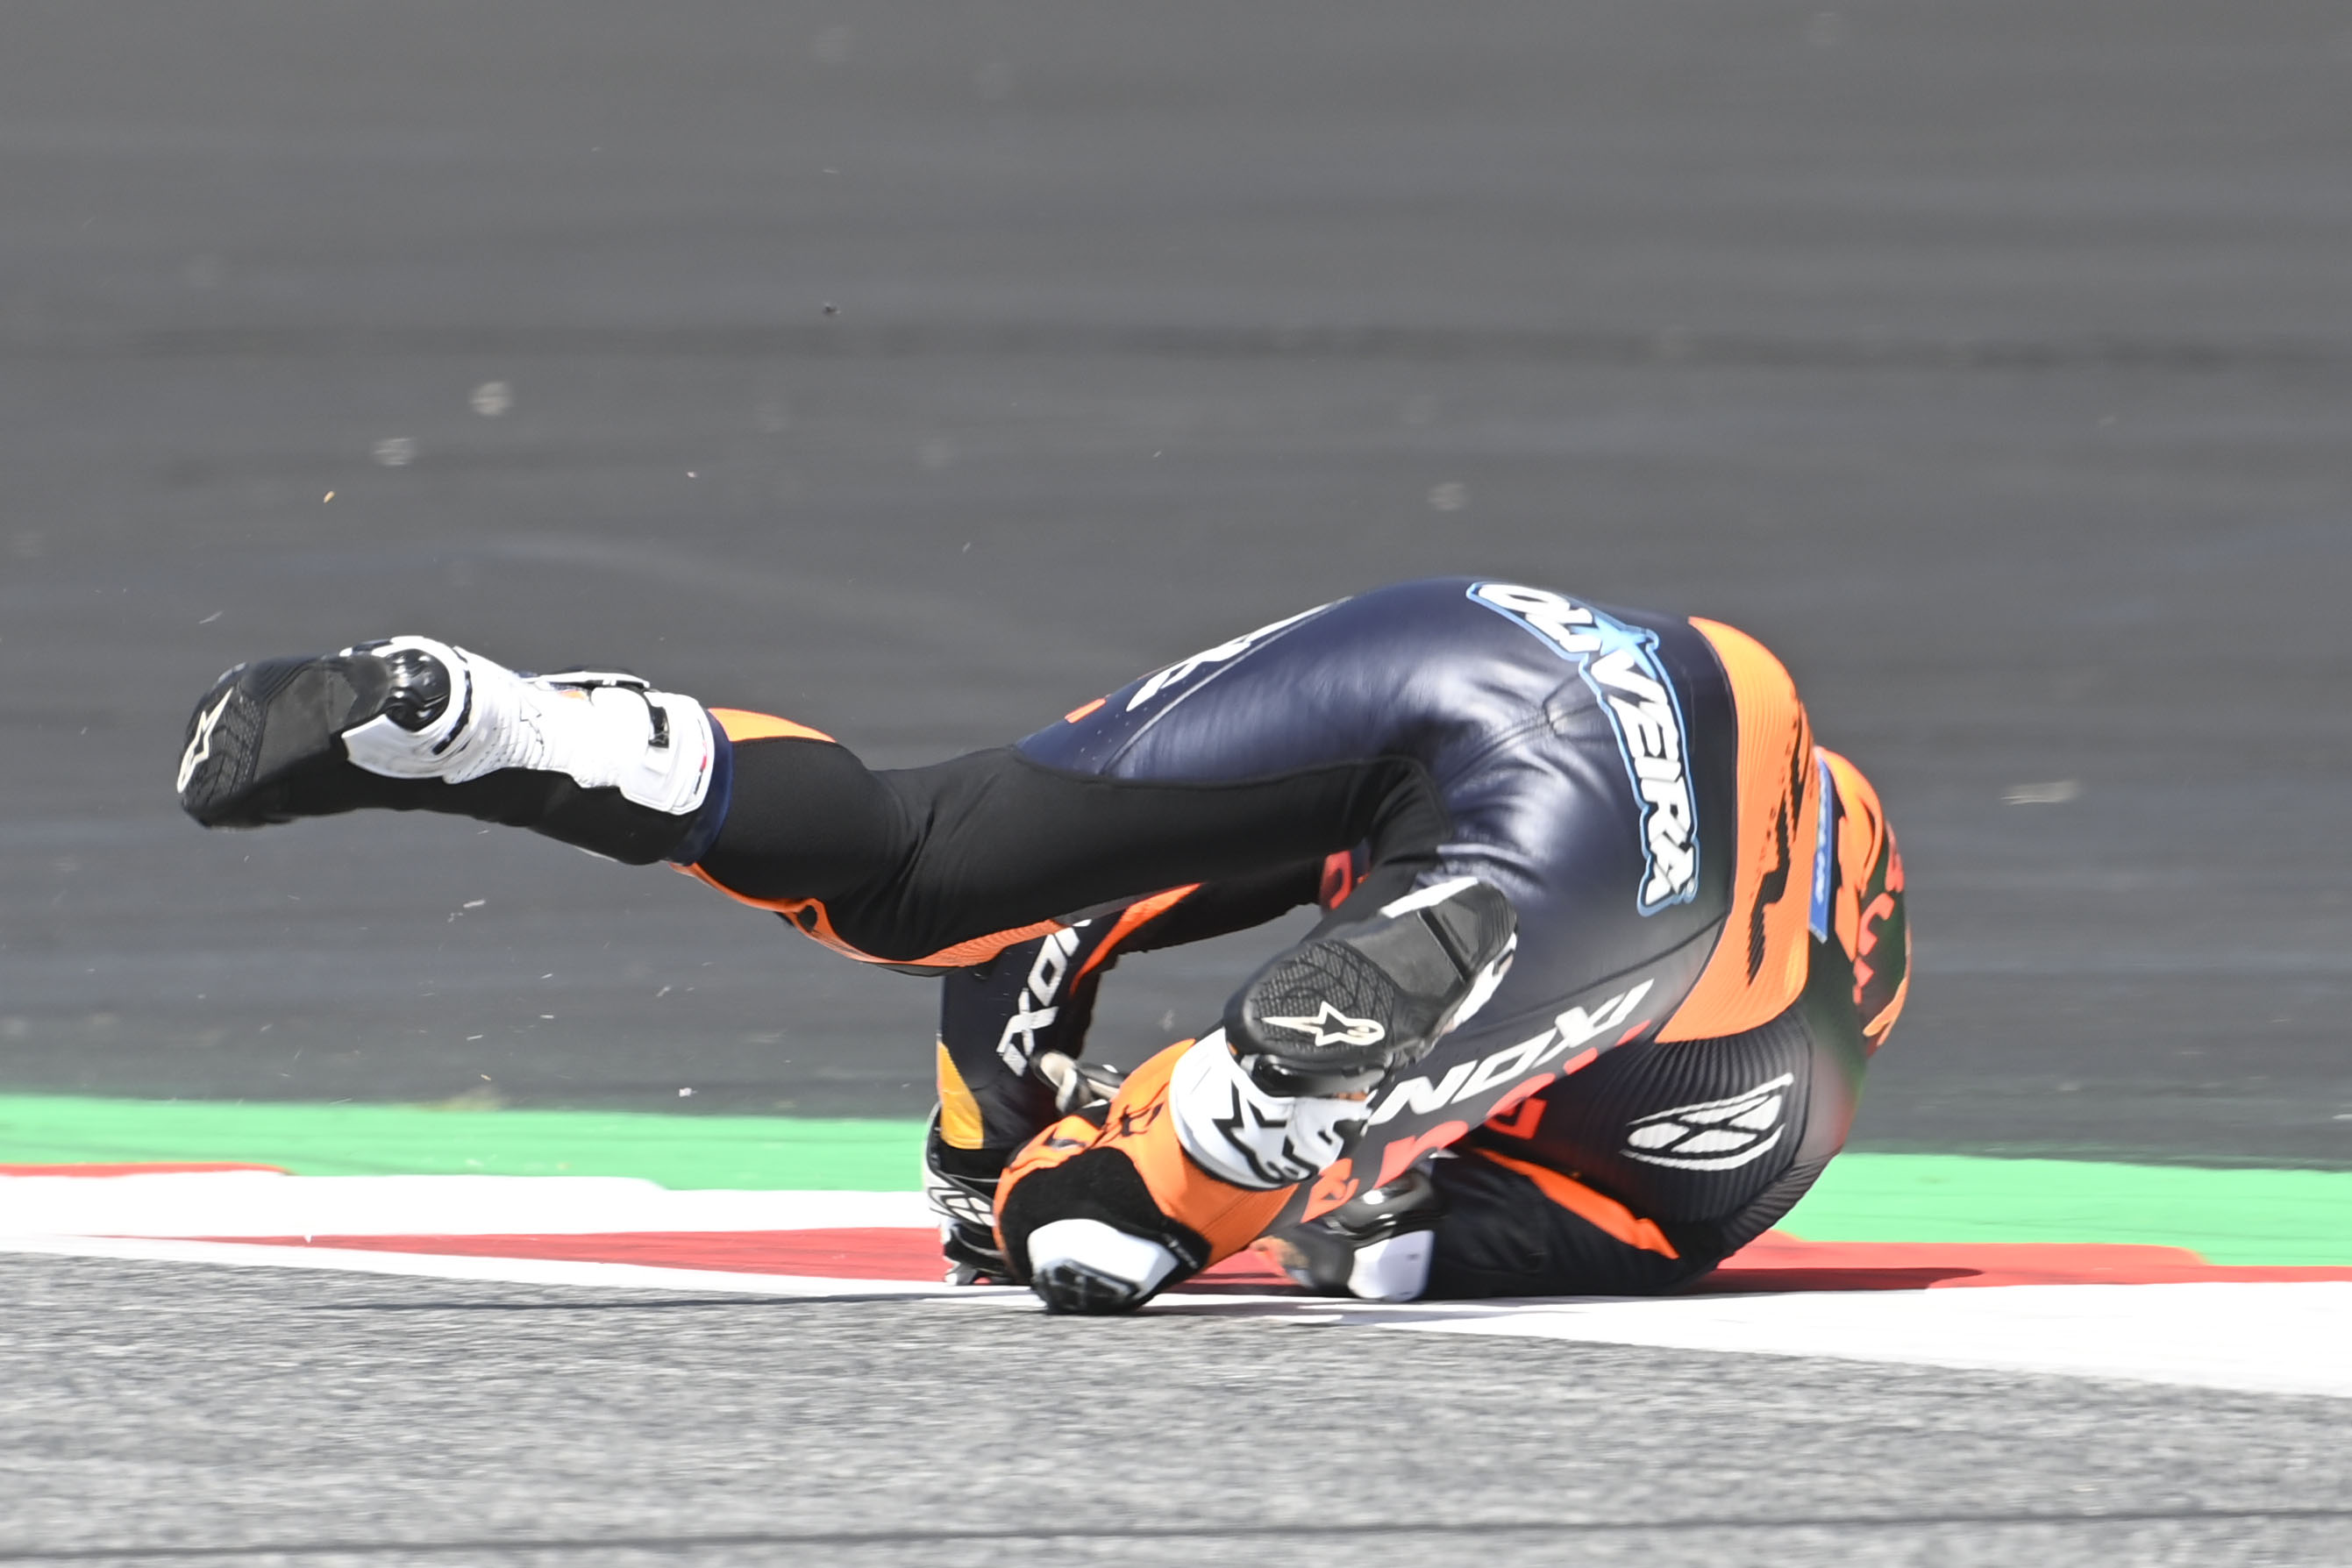 Miguel Oliveira KTM crash Styrian Grand Prix MotoGP practice 2021